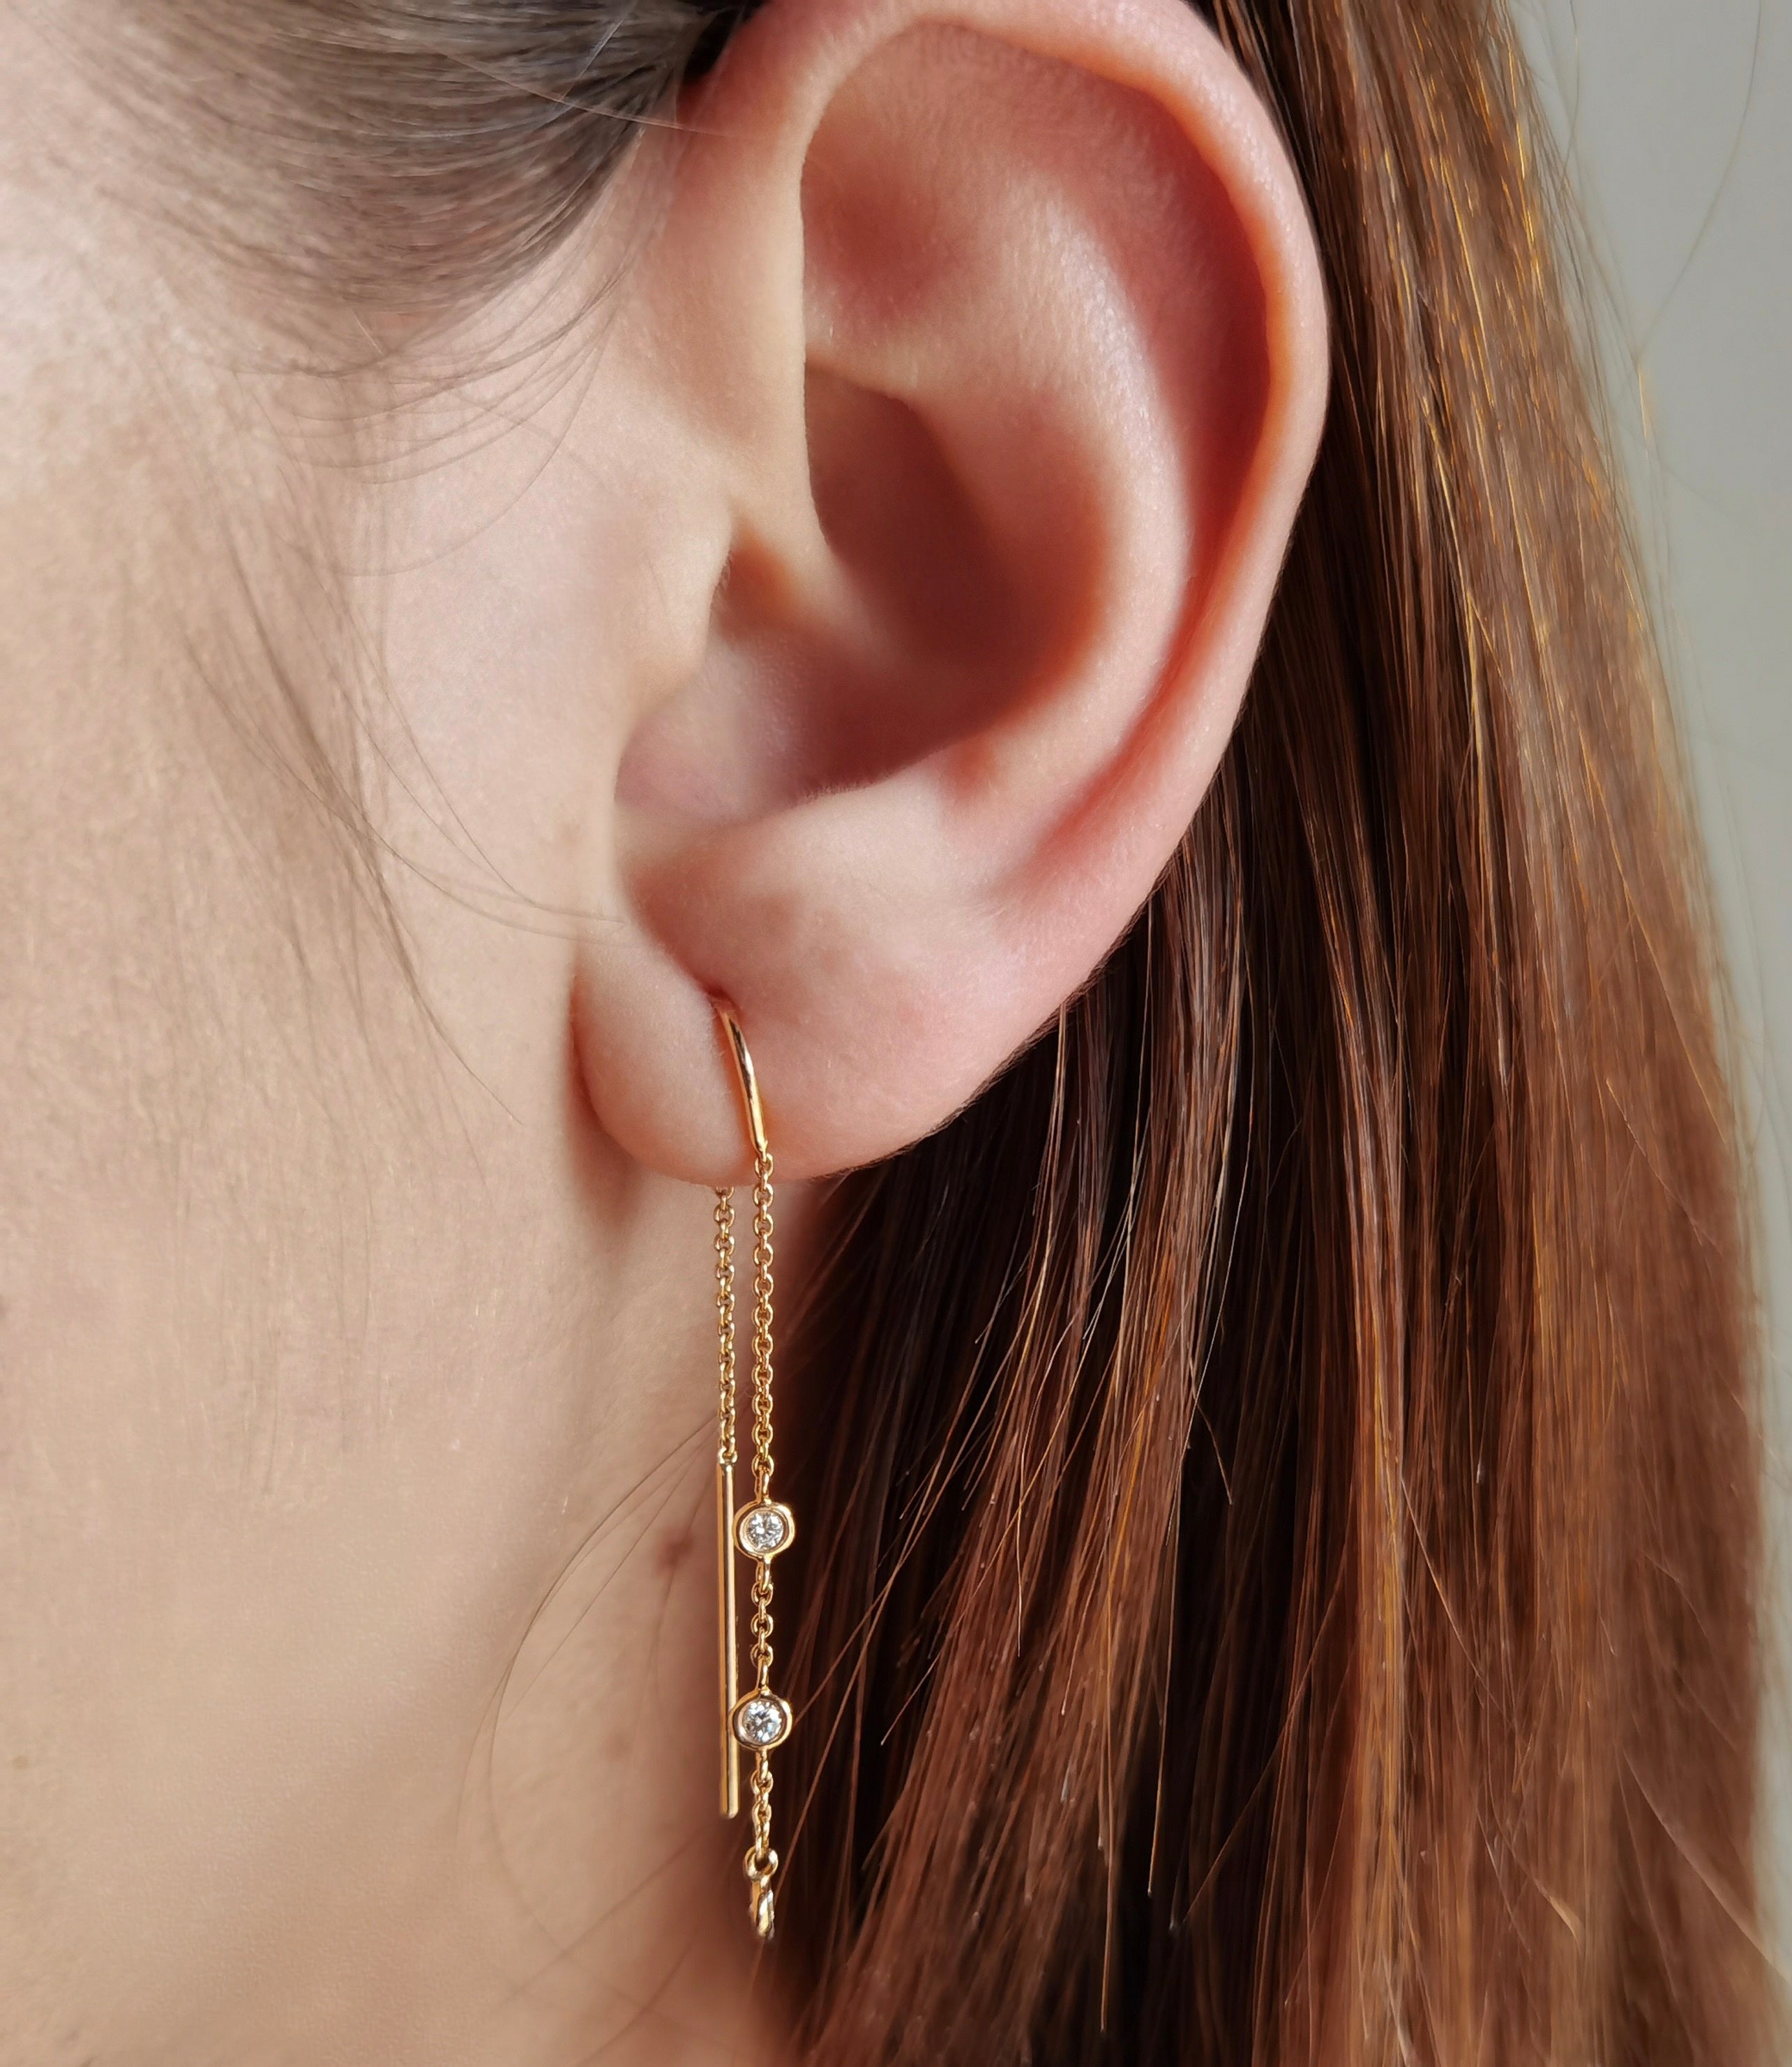 Malini earrings with diamonds